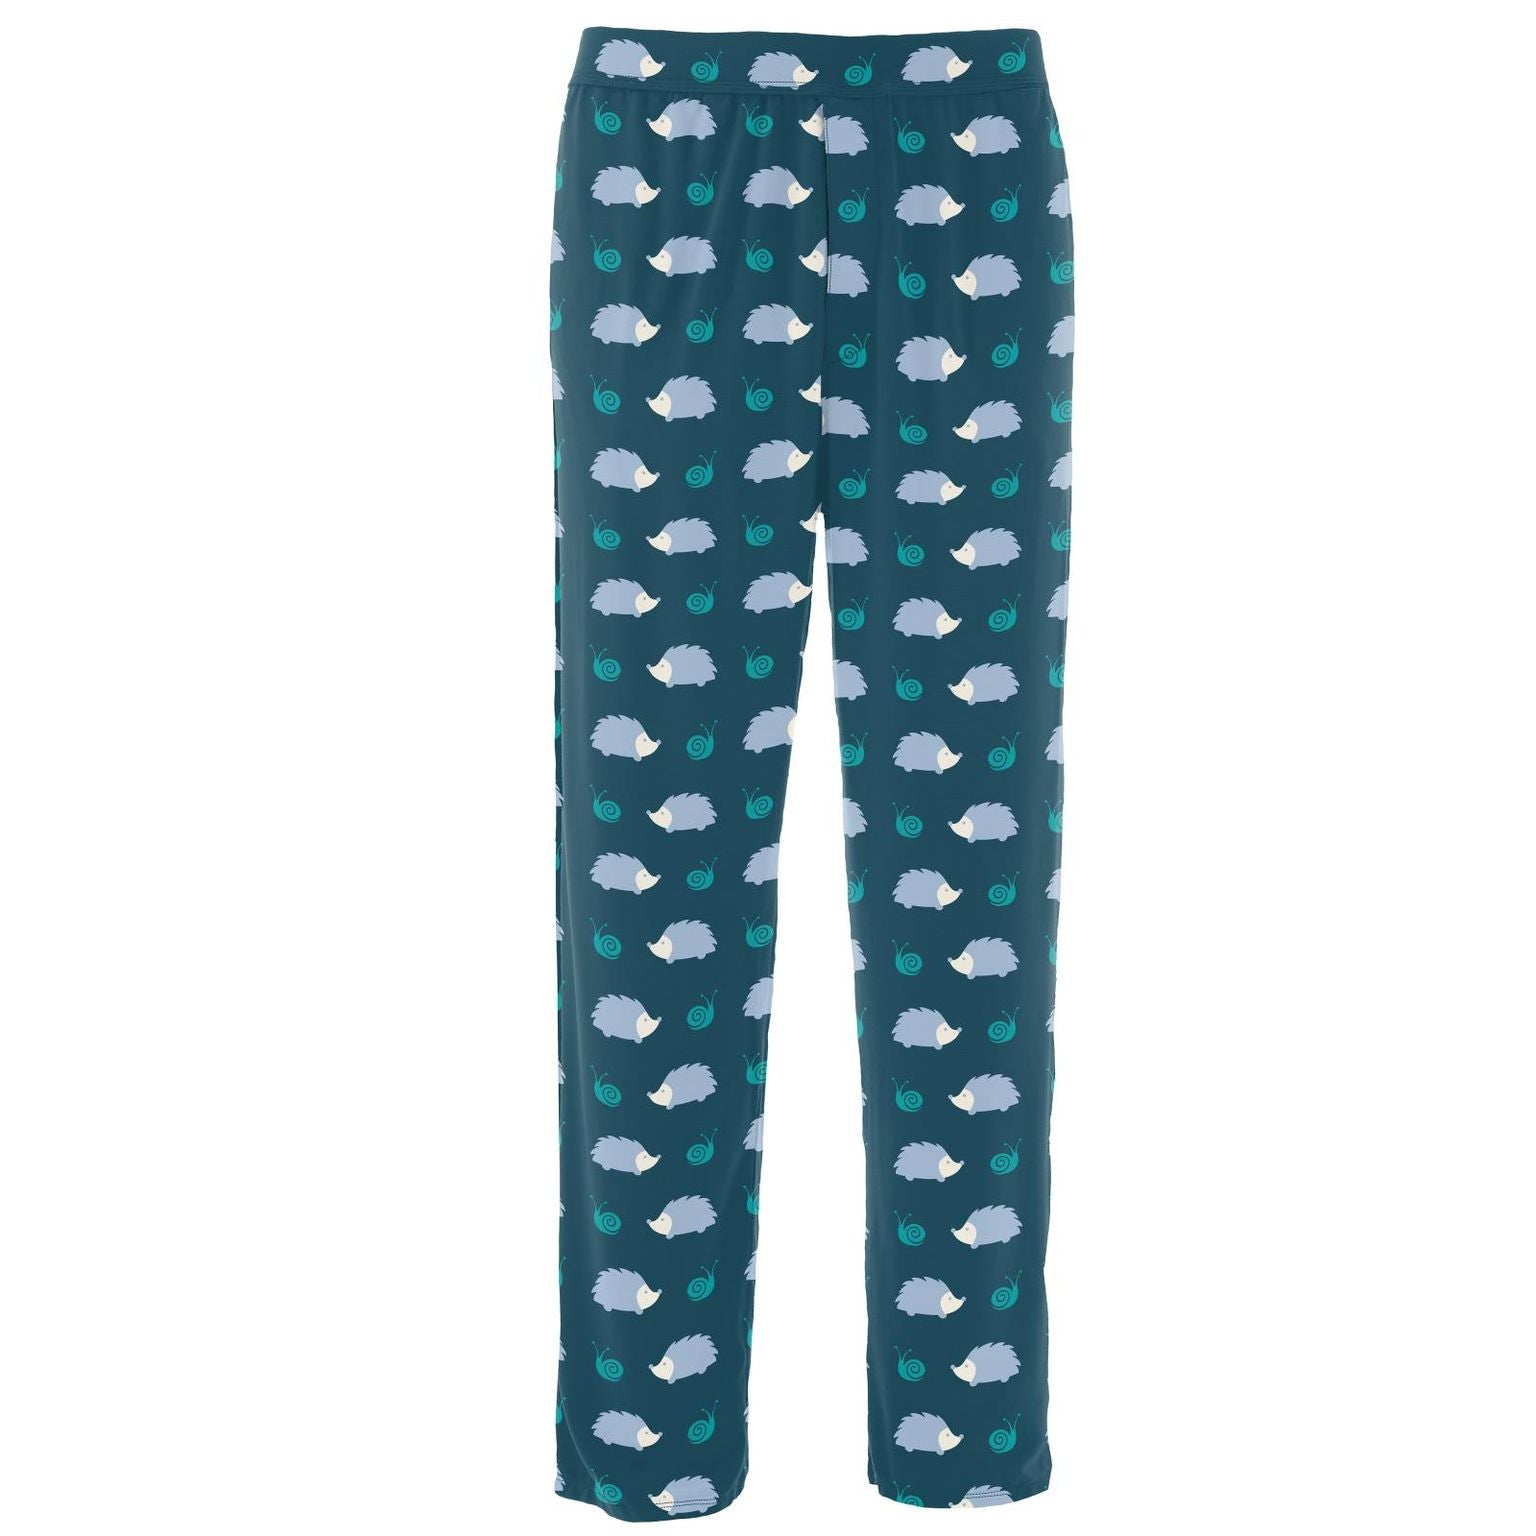 Hedgehog Flannel Pajama Pants, Pajama Pants, Pj's, Lounge Pants, Matching  Family Pj's, Available Adult XS-XXL - Etsy